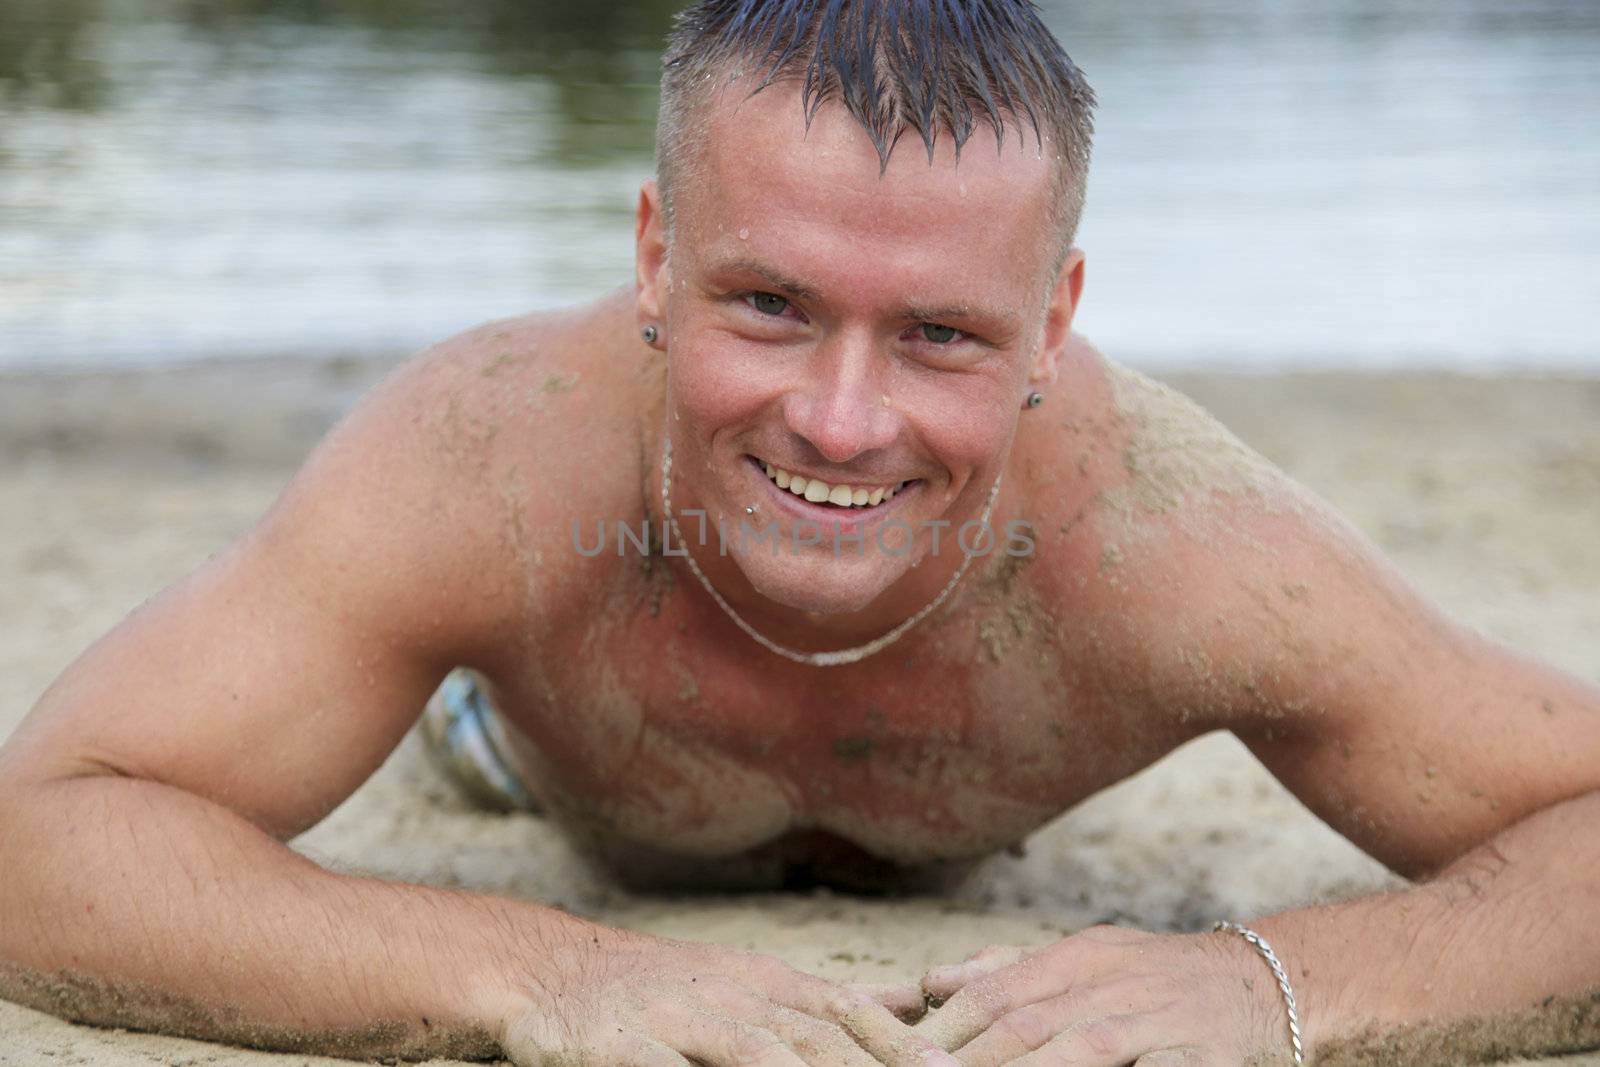 Cheerful Good Looking Man Having Fun In The Sand While Sunbathing